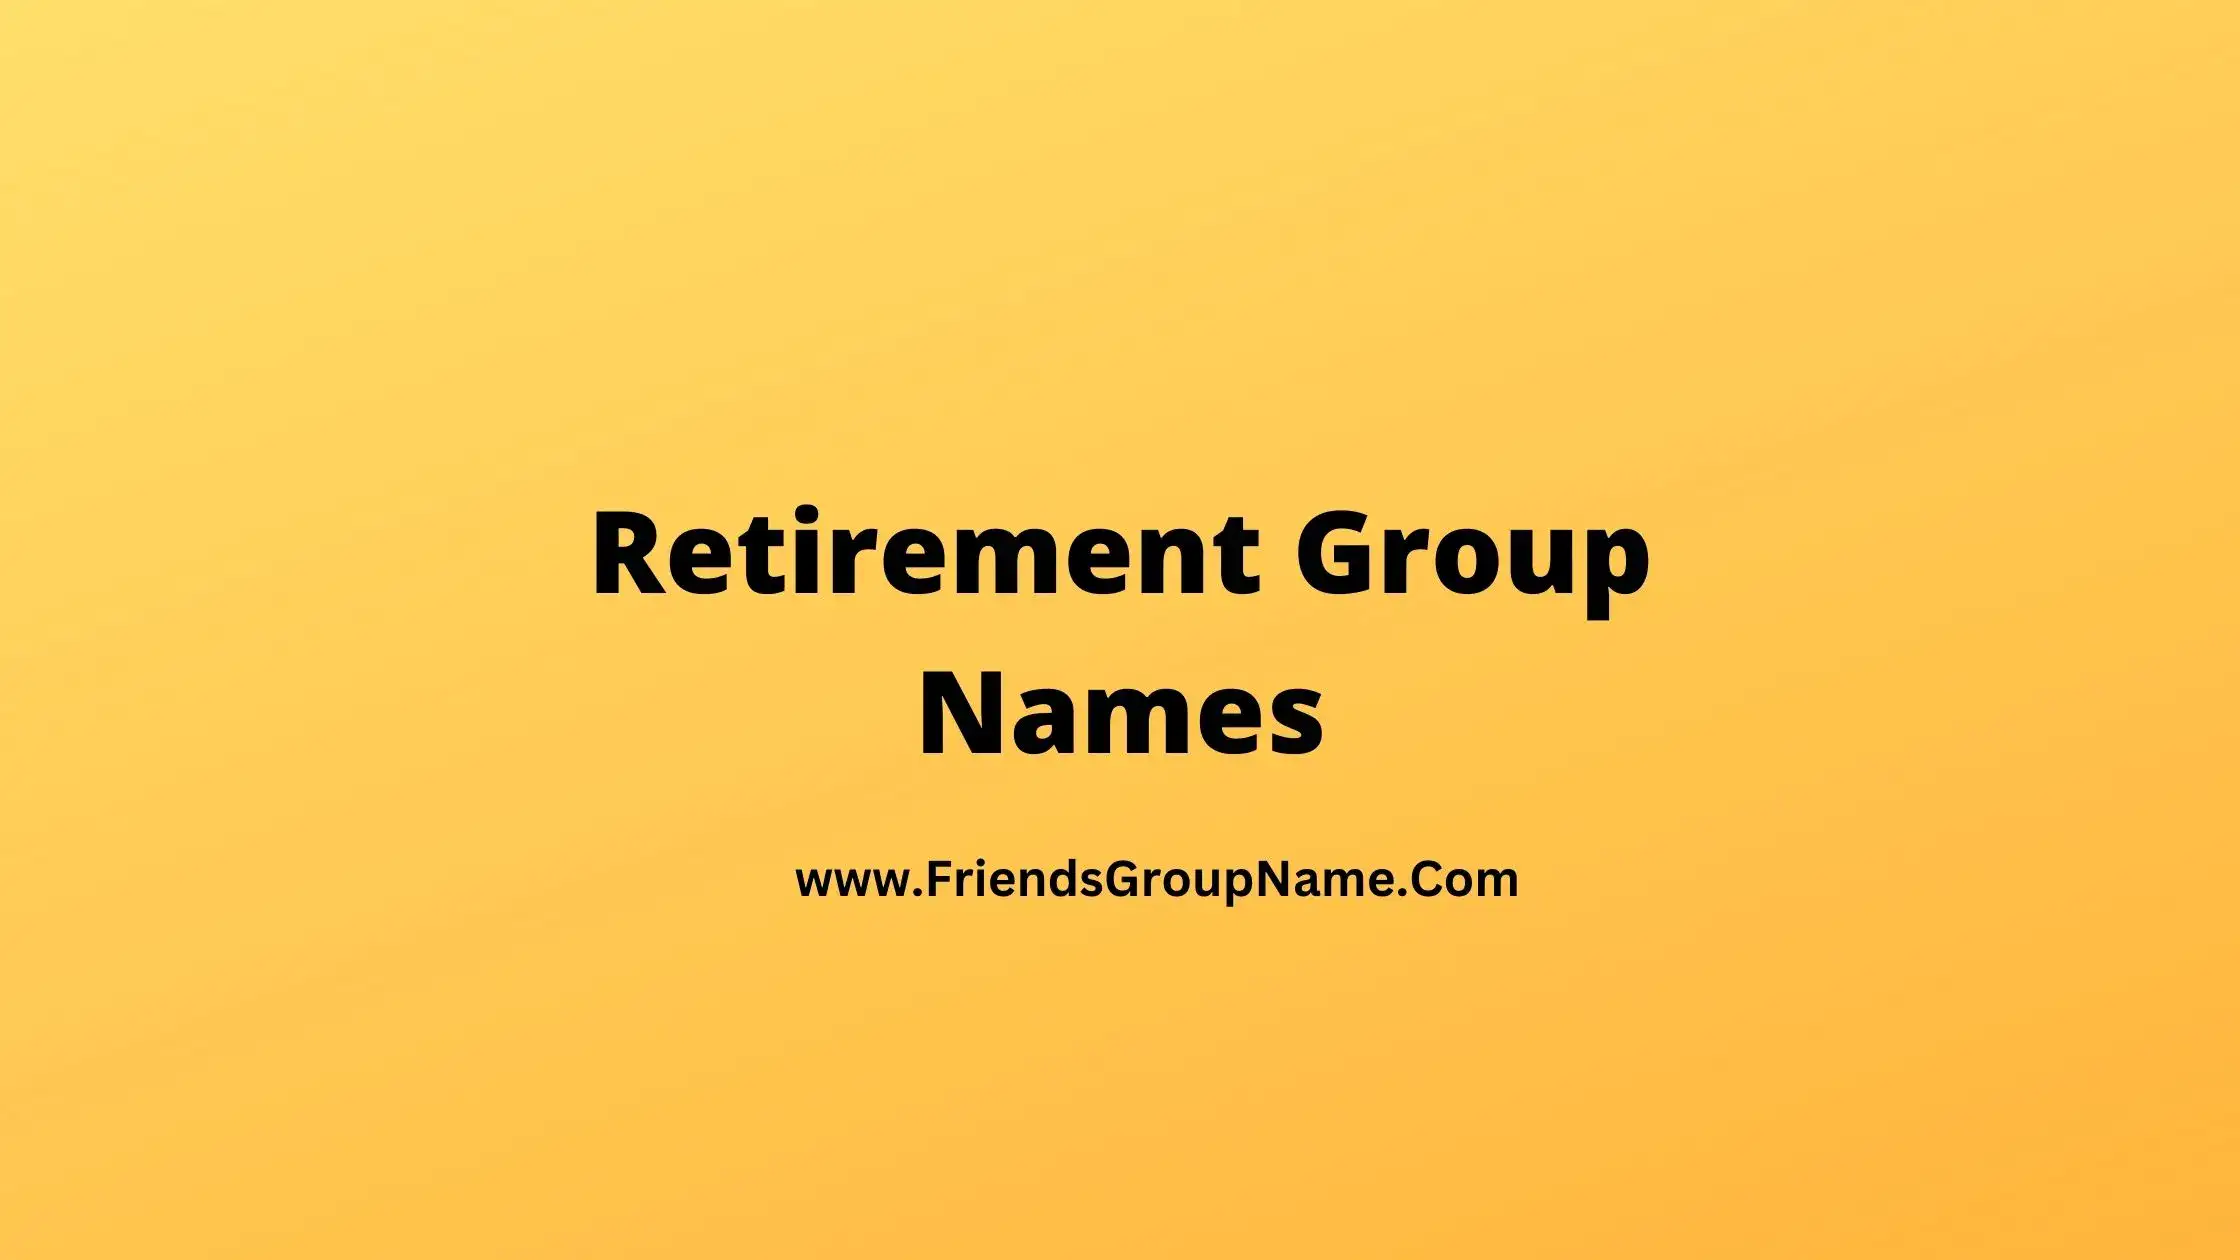 Retirement Group Names